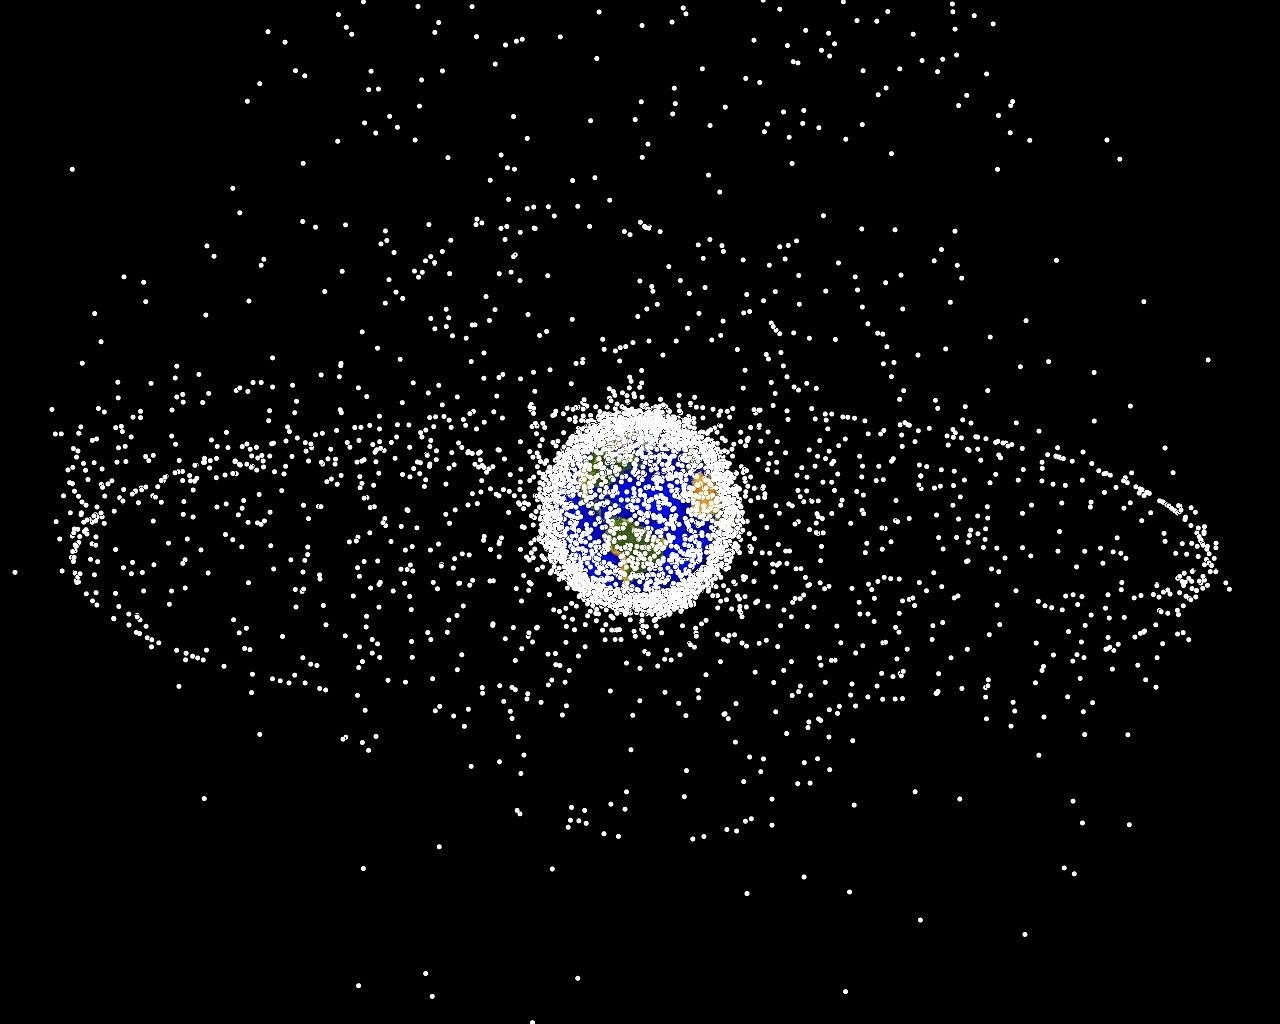 Space Junk Space Debris Earth Orbits  - WikiImages / Pixabay